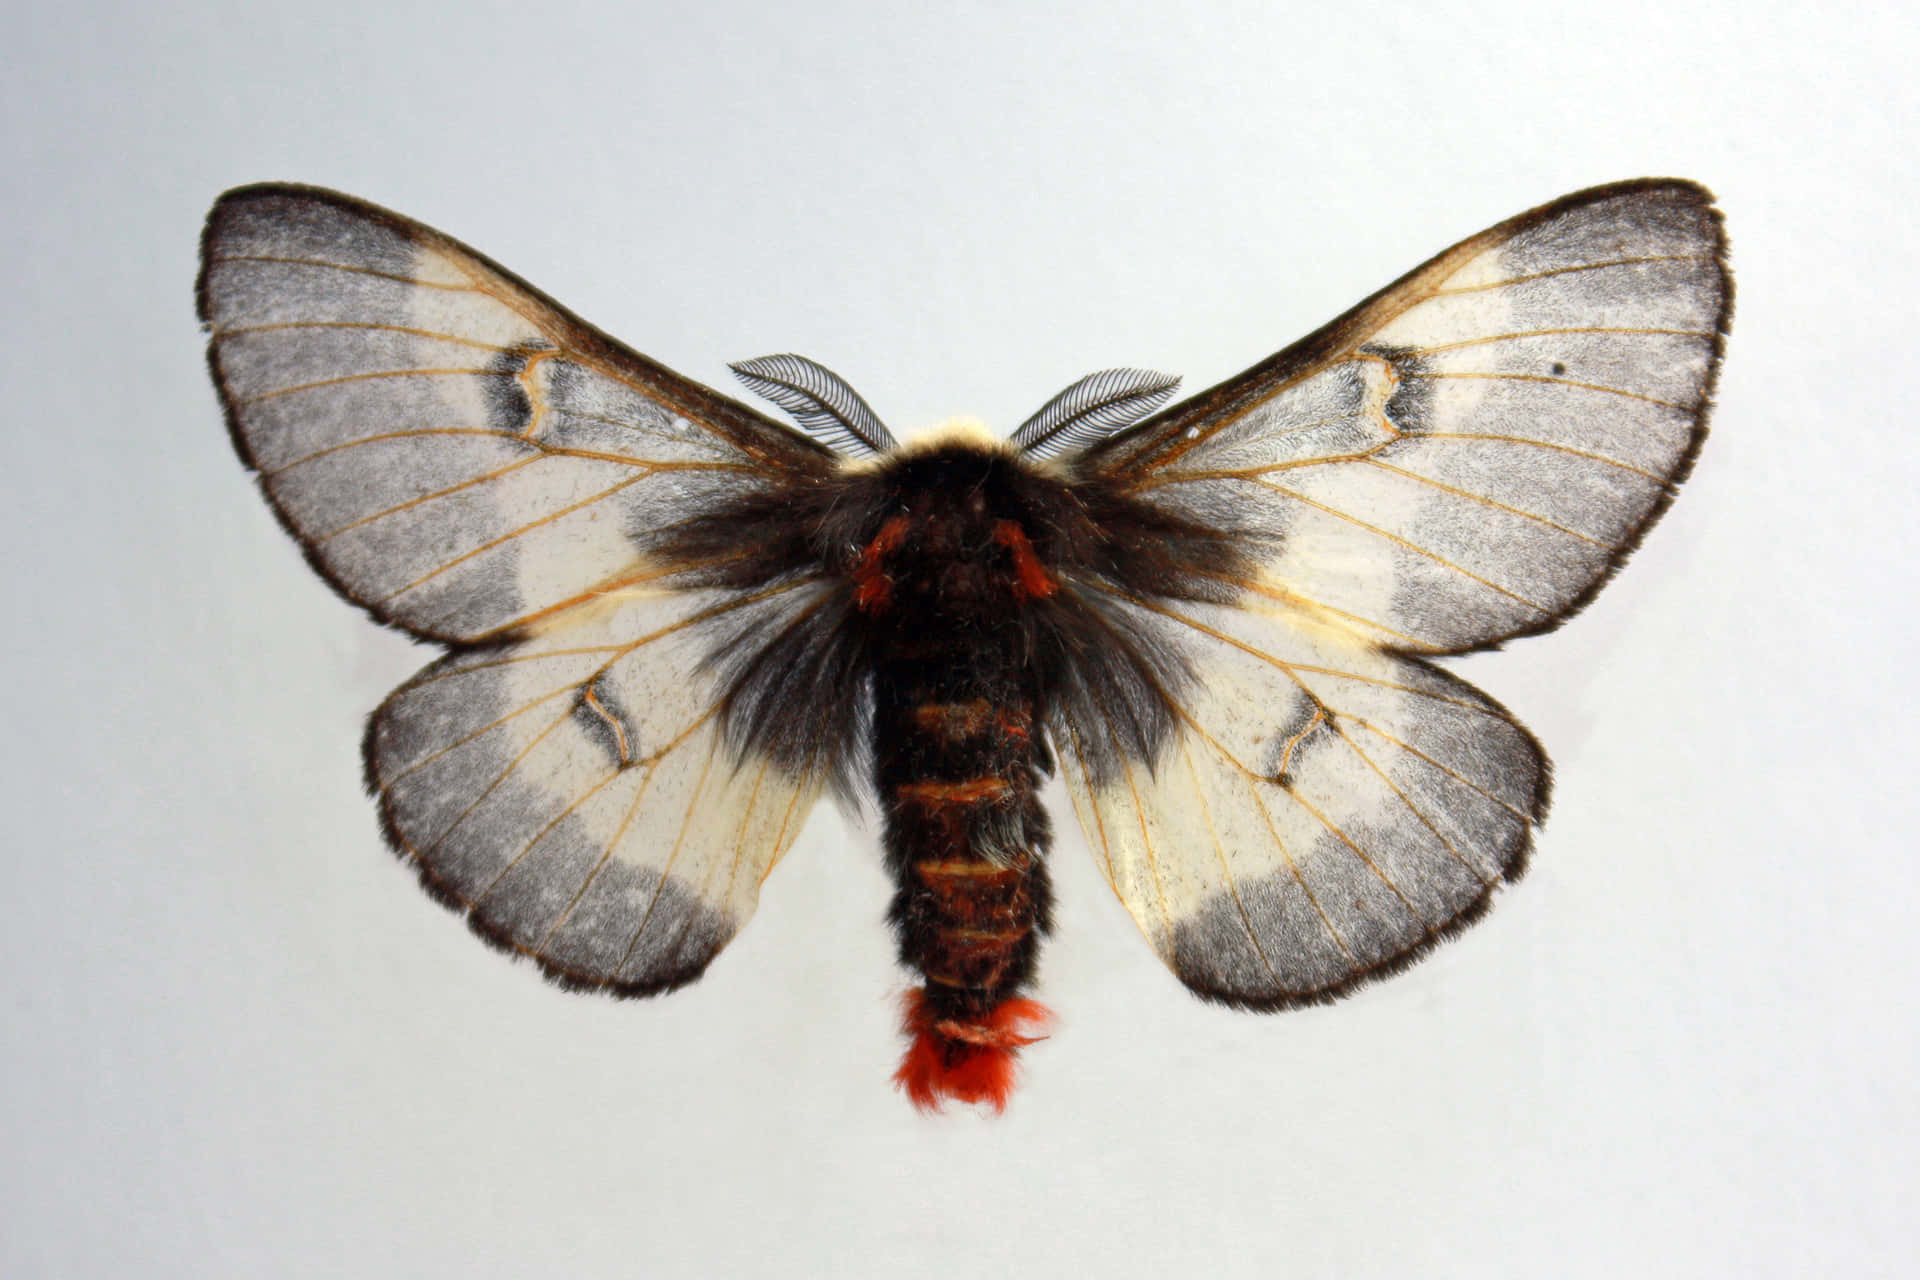 Closeup examination of a beautiful moth